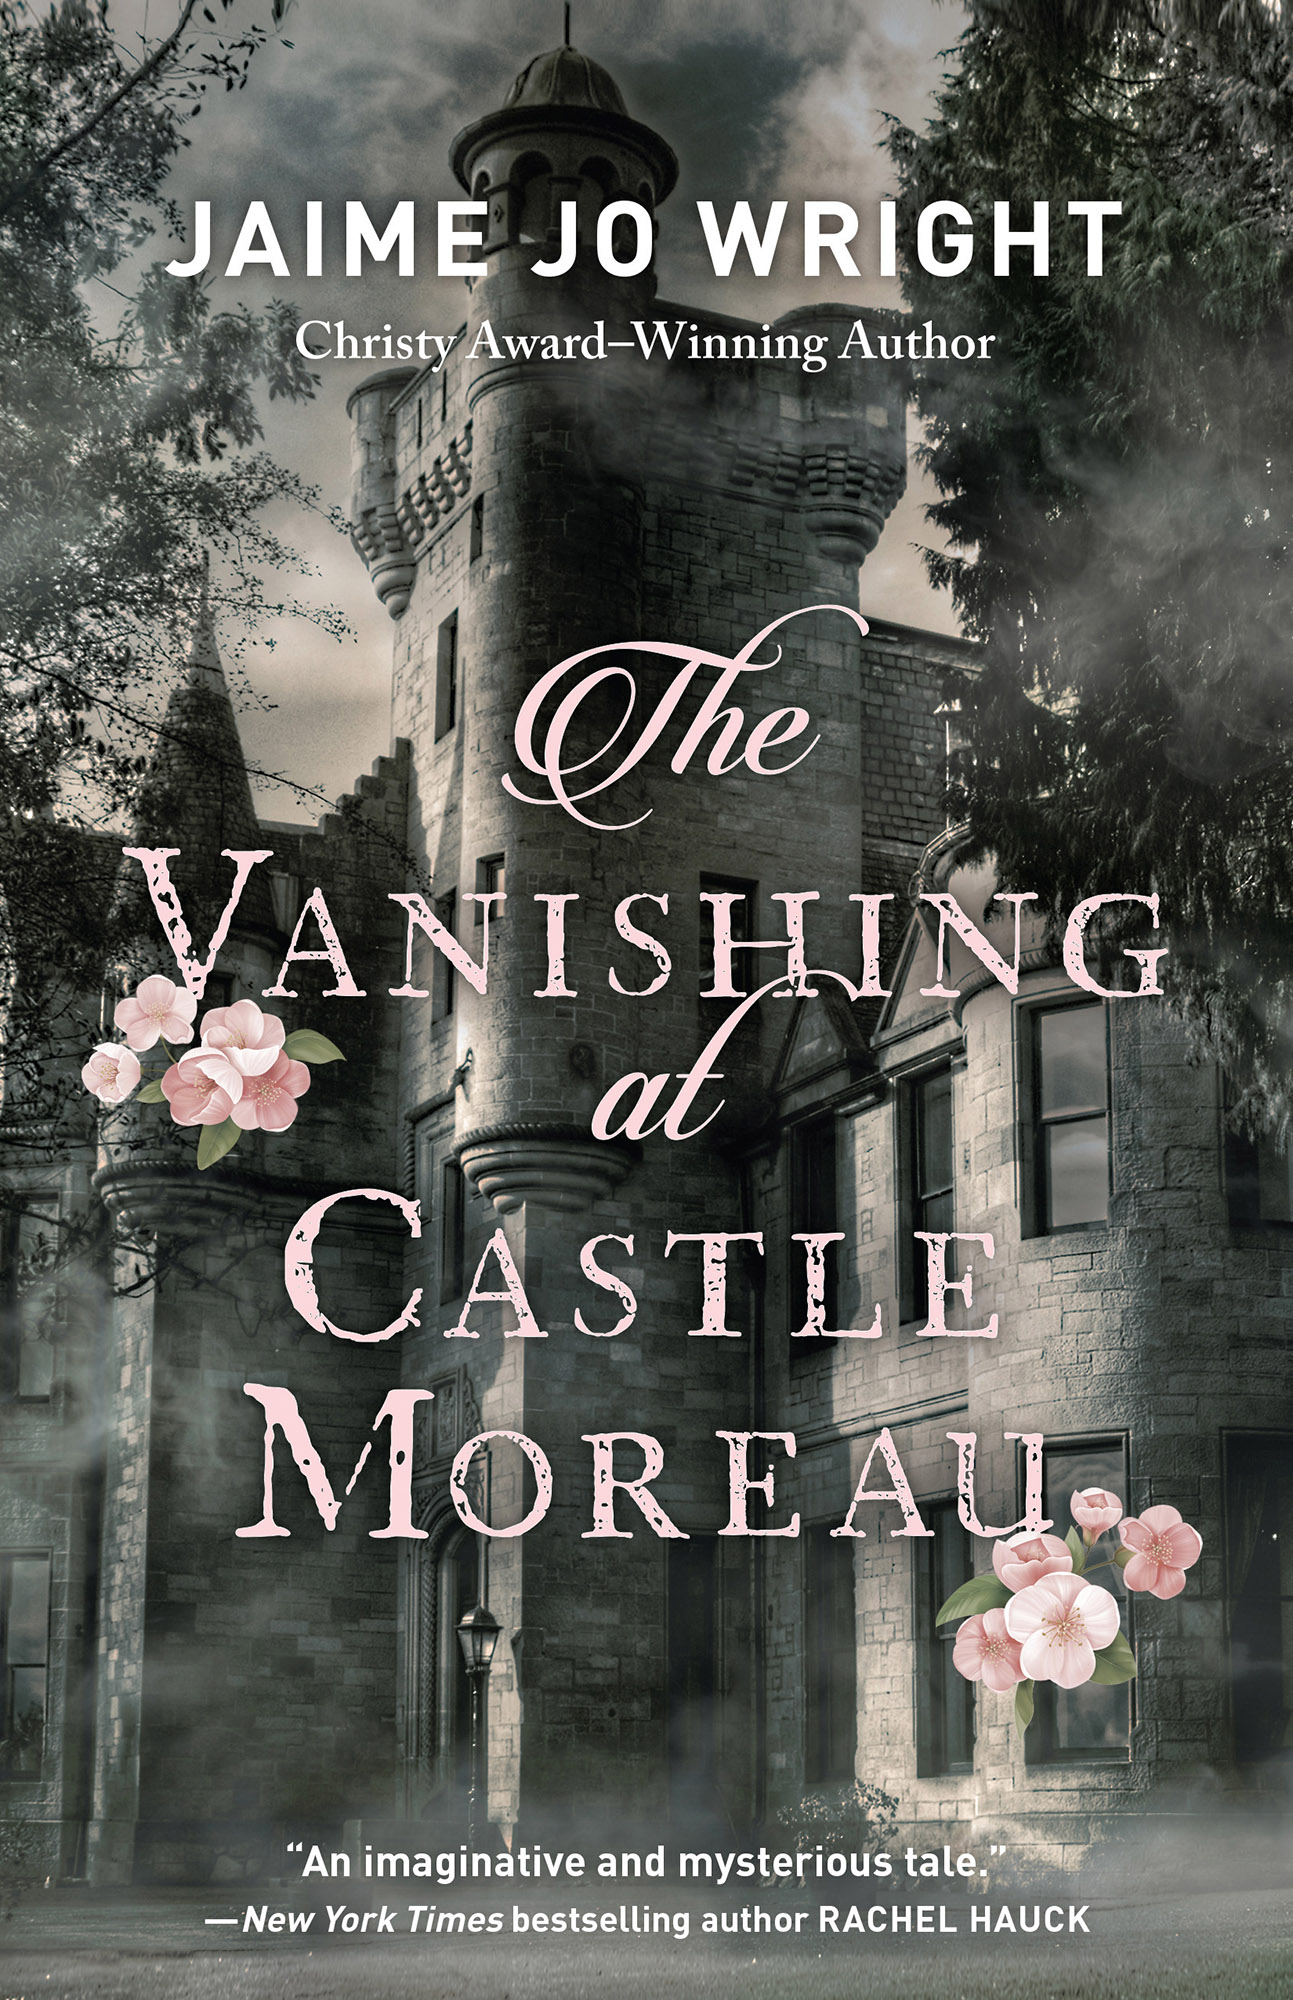 The Vanishing at Castle Moreau by Jaime Jo Wright